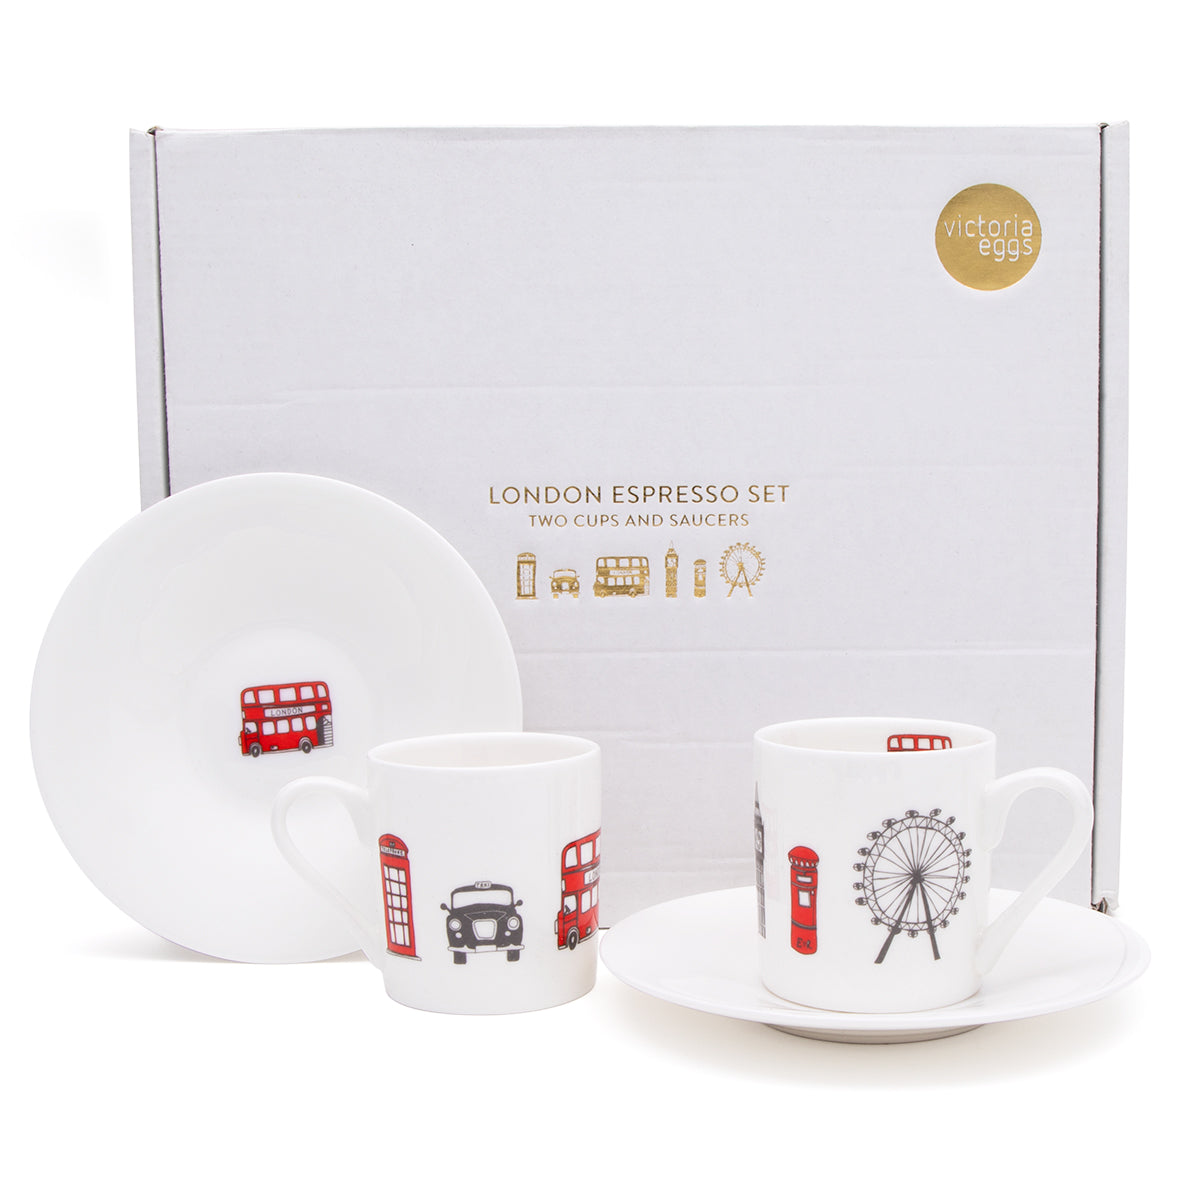 London Skyline Espresso Cups Set by Victoria Eggs Boxed